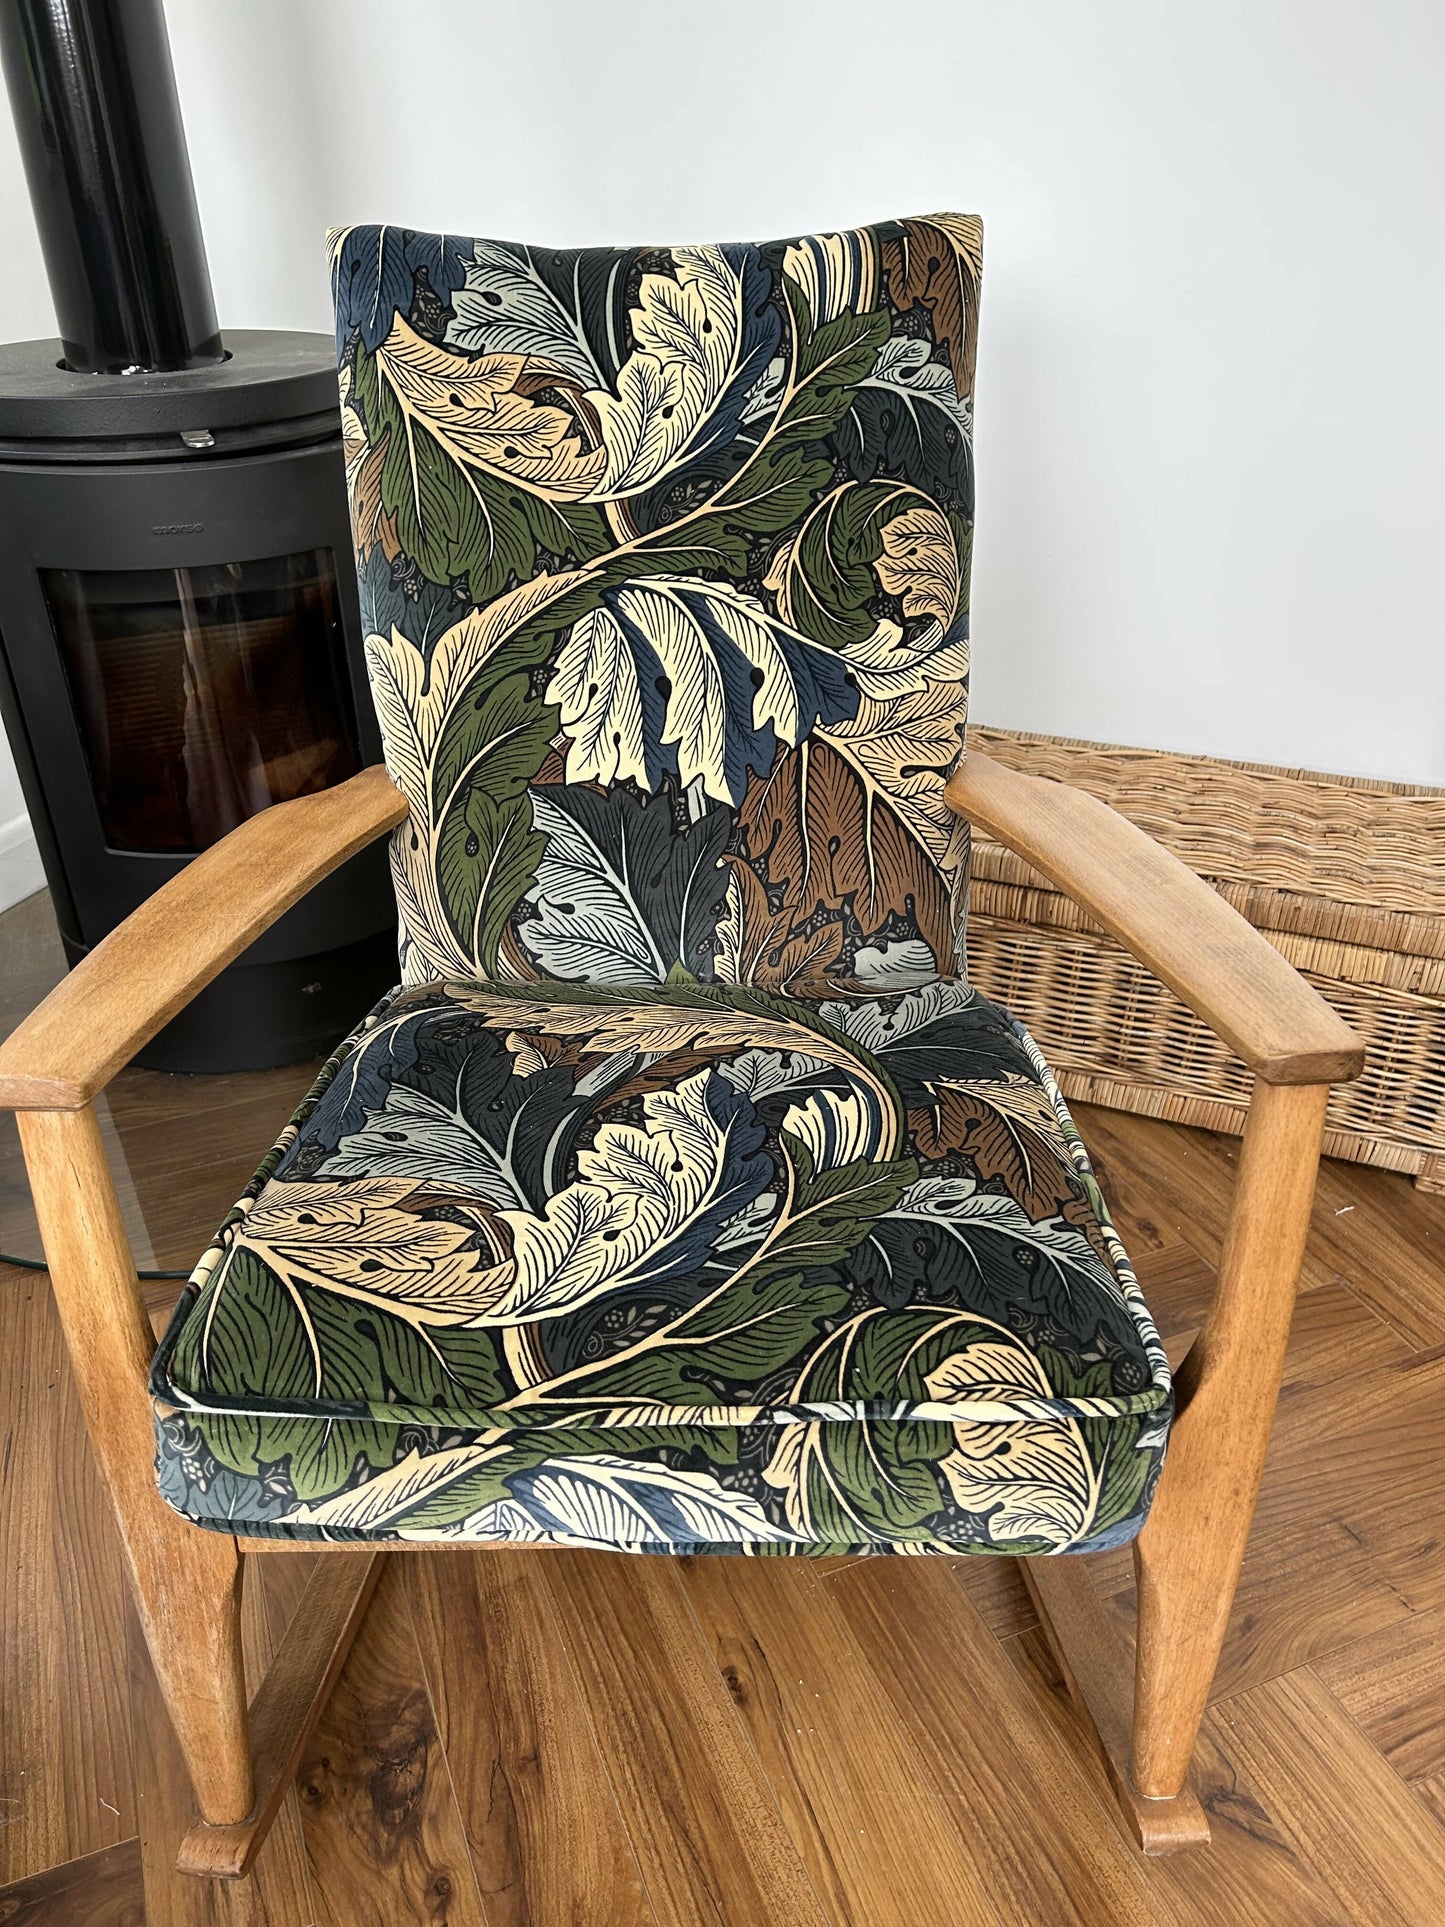 SOLD- A 1970s Vintage PK Rocking Chair William Morris velvet